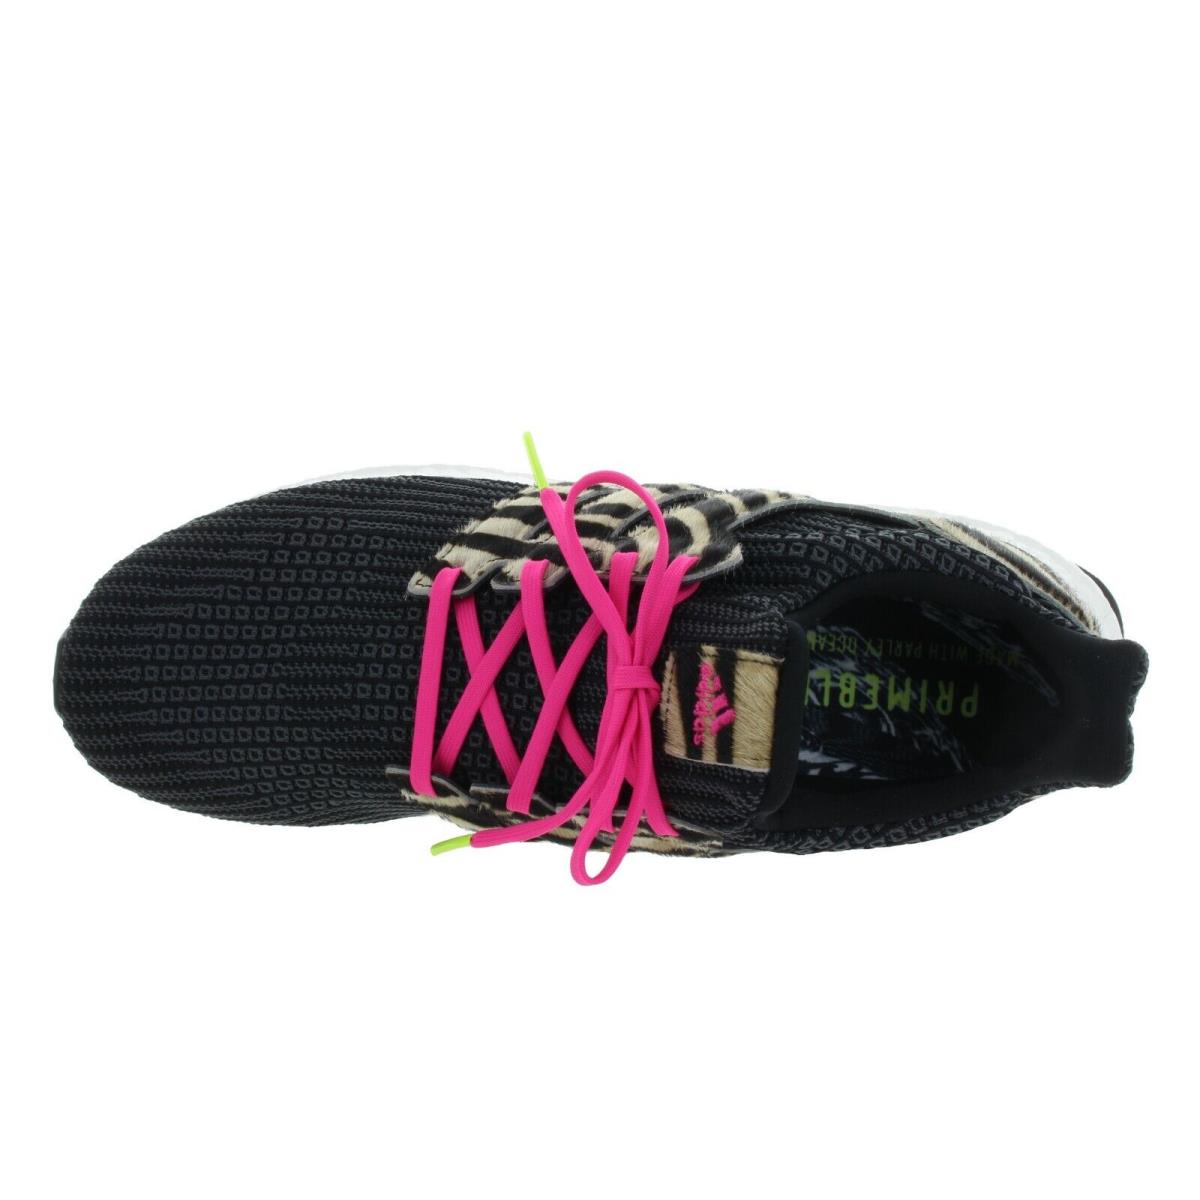 Adidas shoes UltraBoost DNA Zebra - Core Black, Cloud White, Shock Pink 3